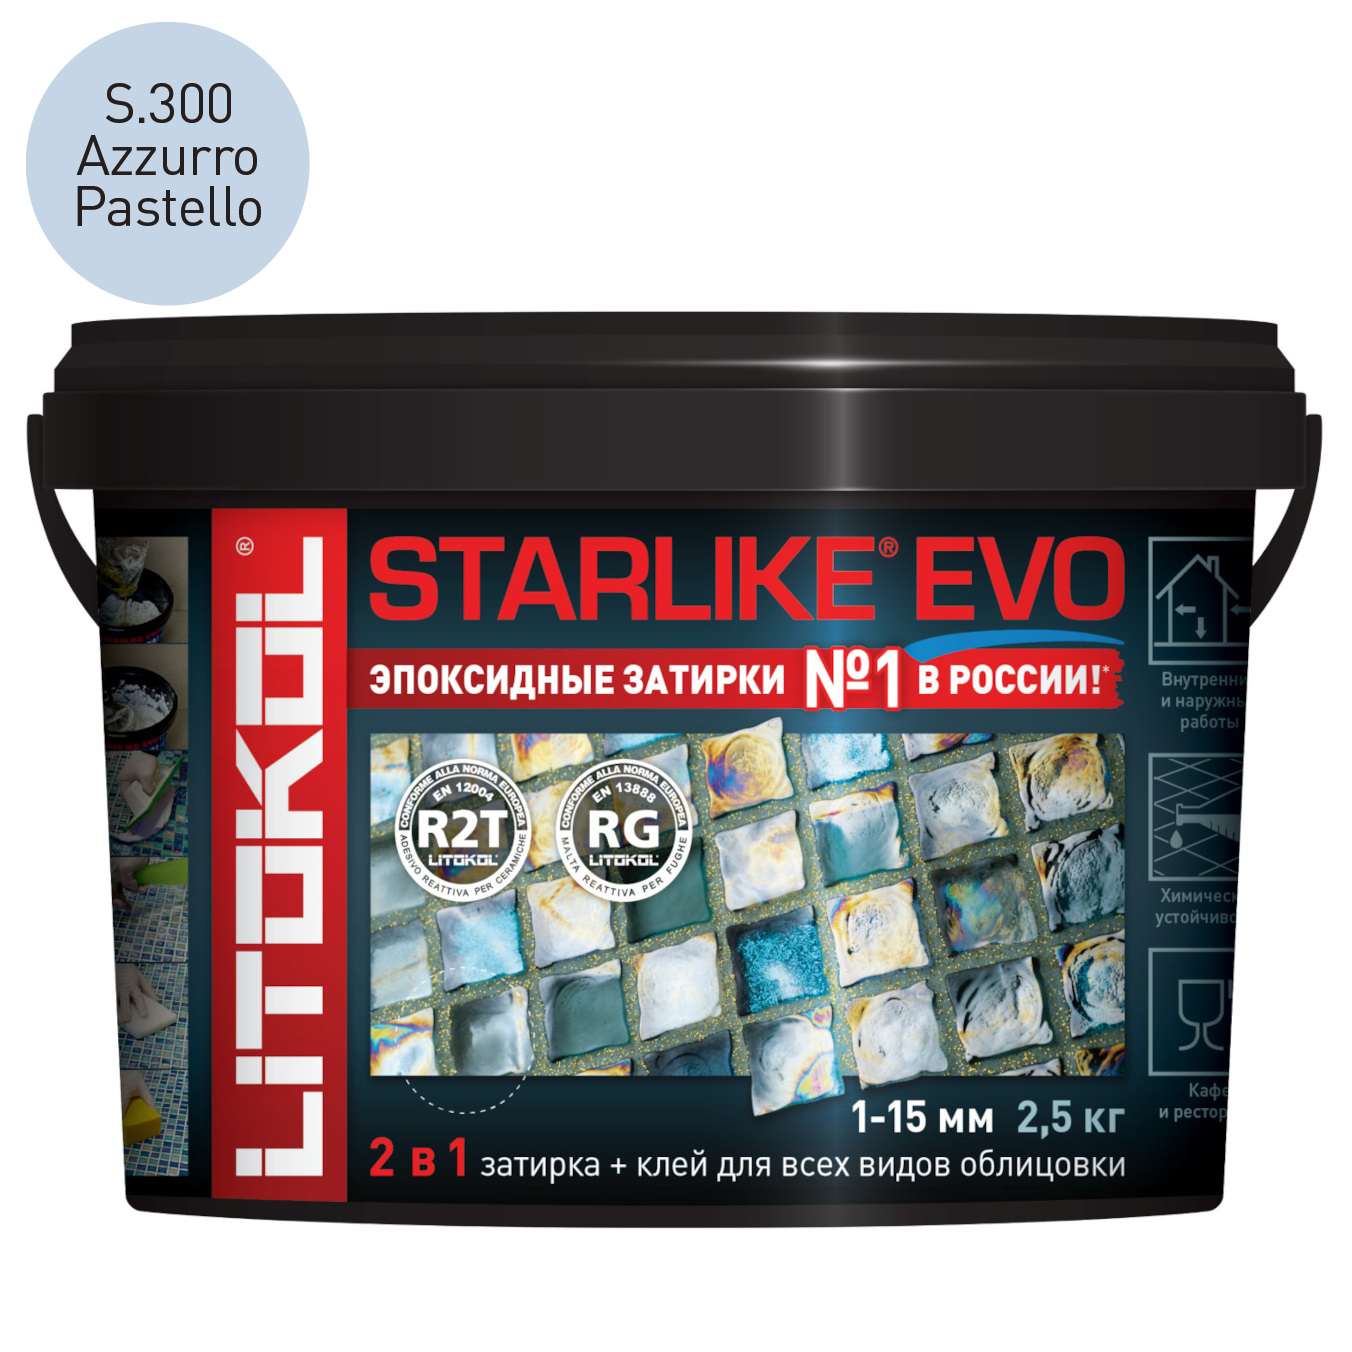 Затирка эпоксидная Litokol Starlike Evo S.300 Azzurro Pastello (2.5 кг.)